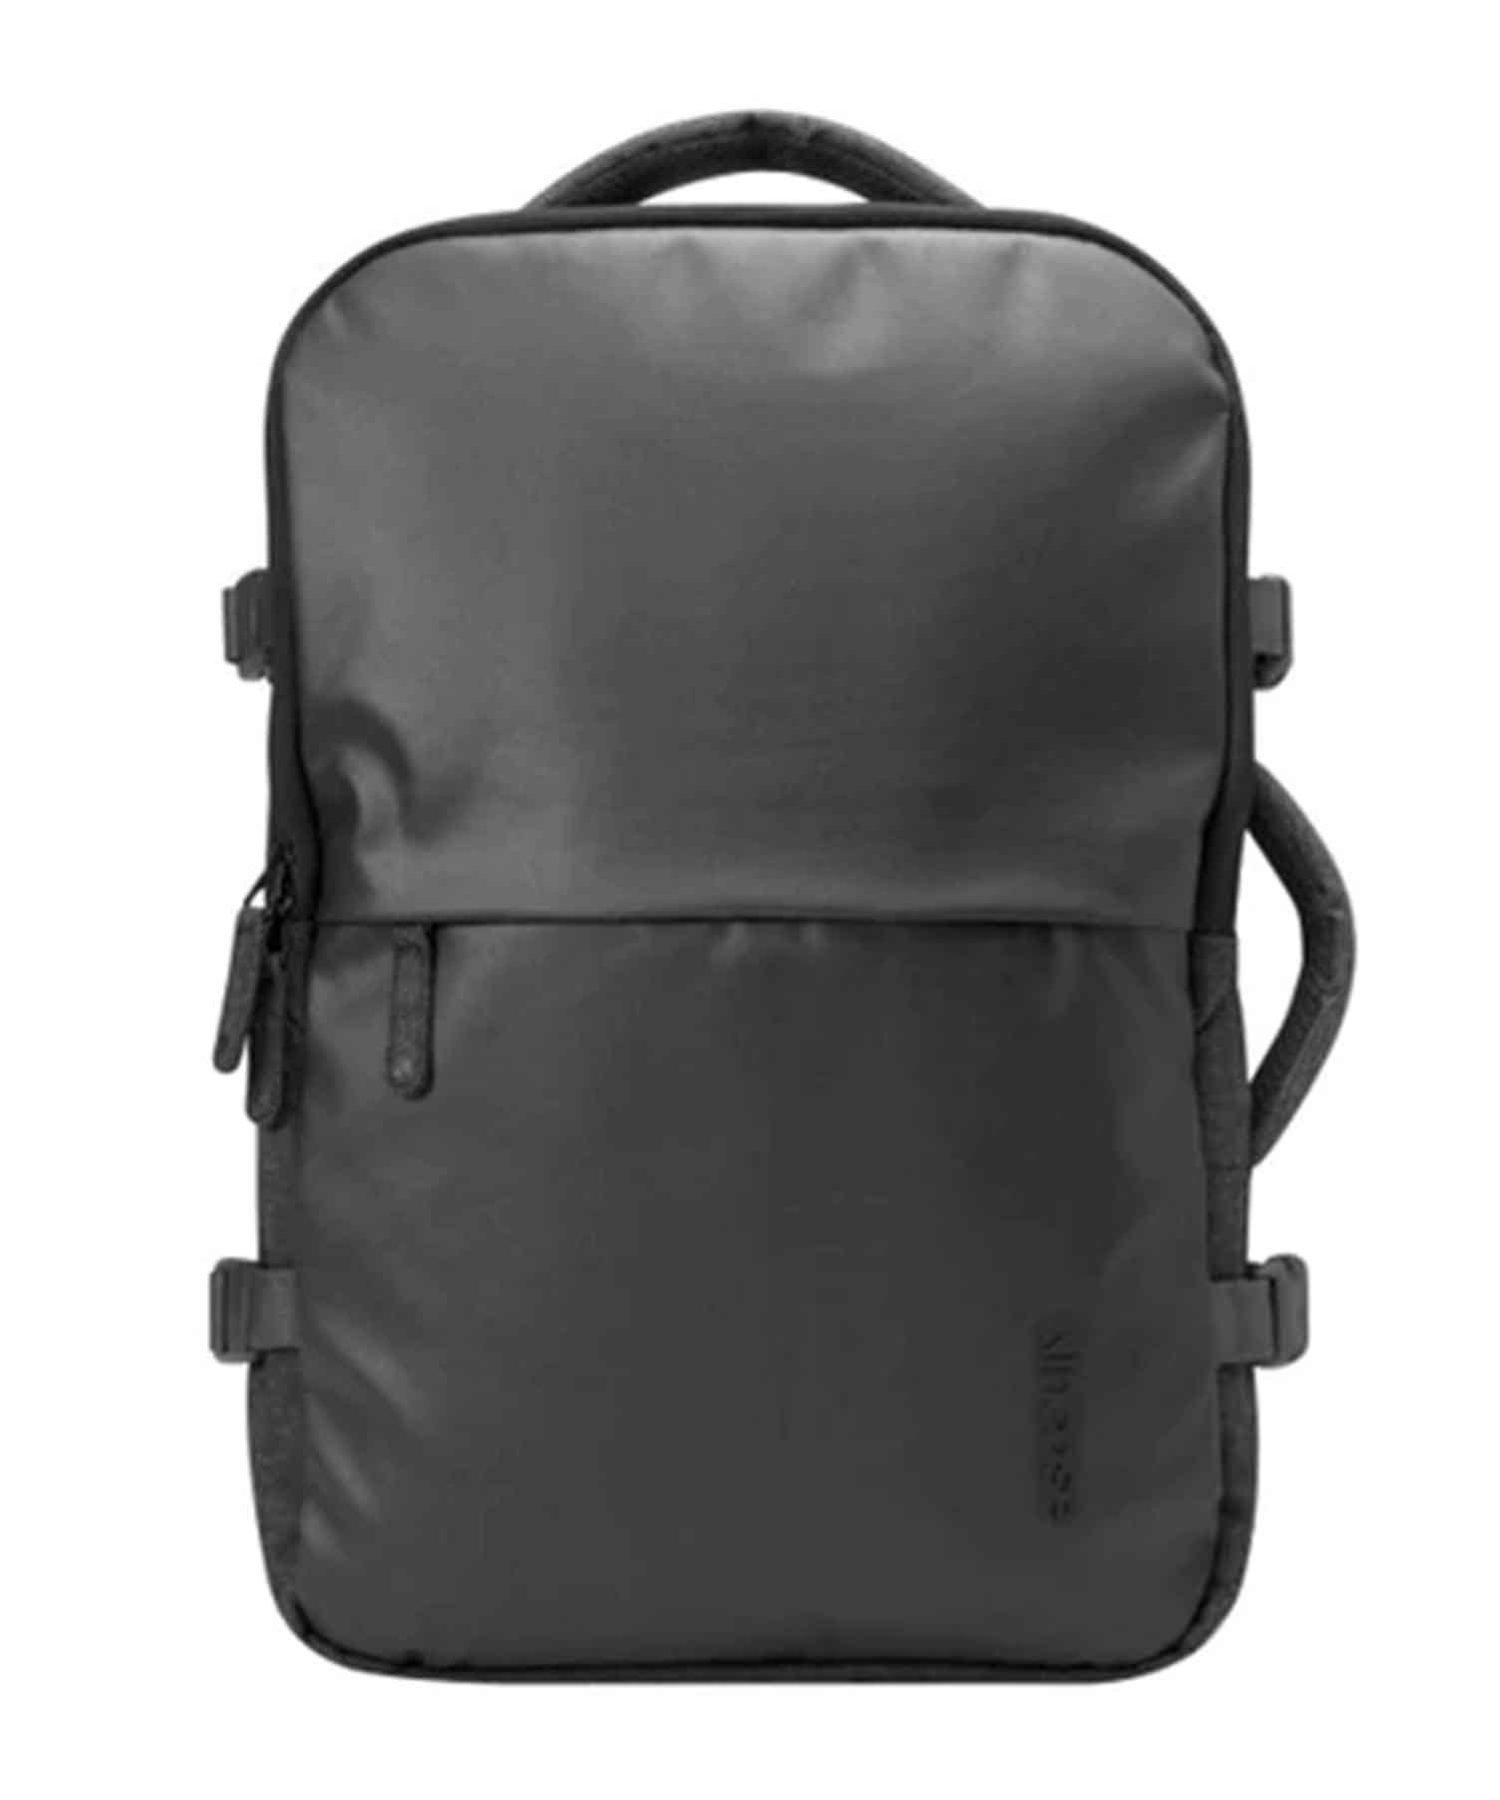 Incase (U)CL90004 EO Travel Backpack 16inch バックパック Incase インケース バッグ リュック バックパック ブラック【送料無料】